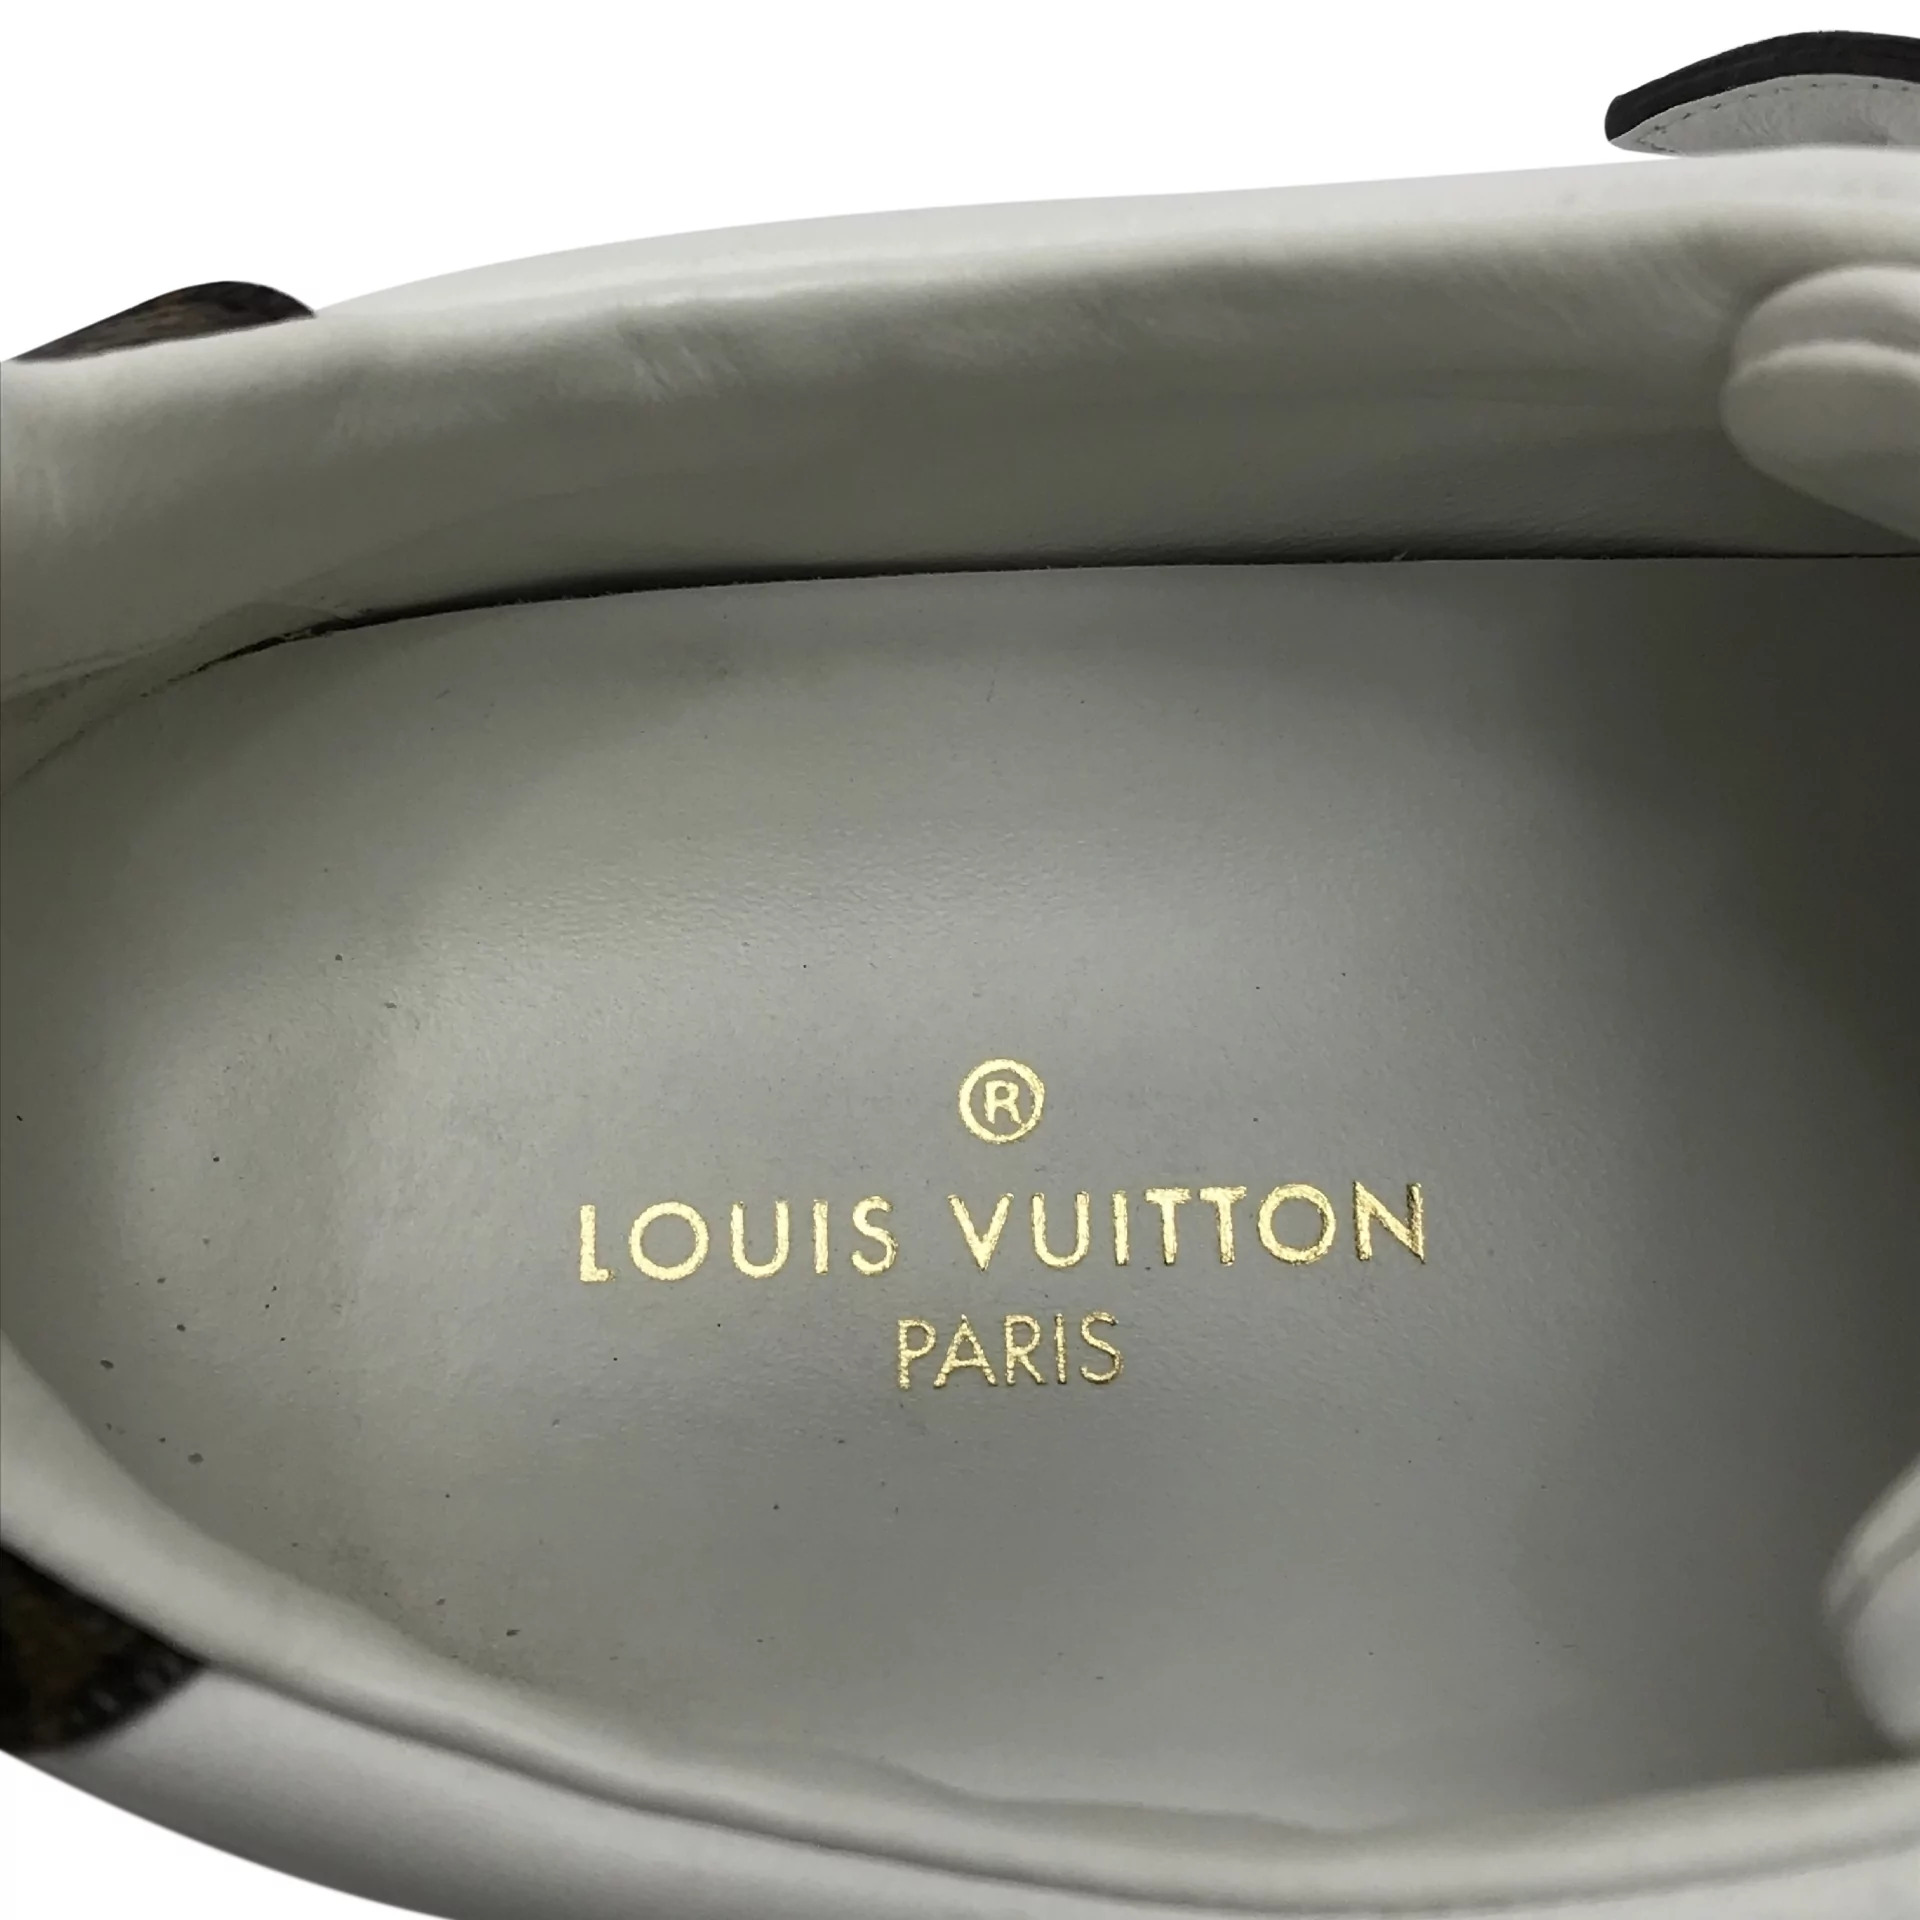 Sneaker Louis Vuitton Frontrow 